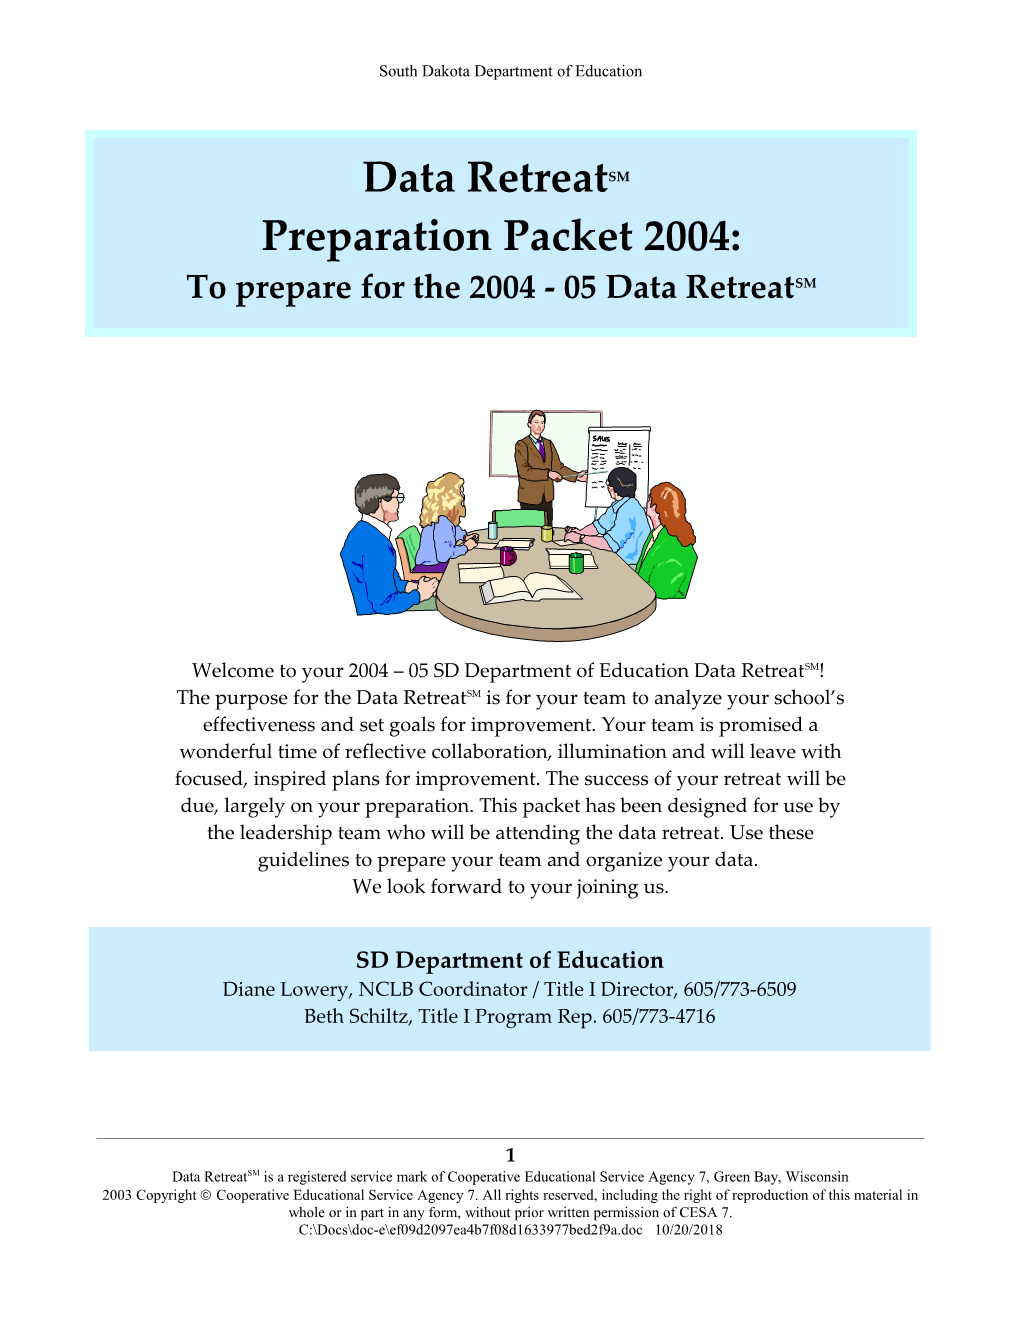 Data Retreat Preparation Packet